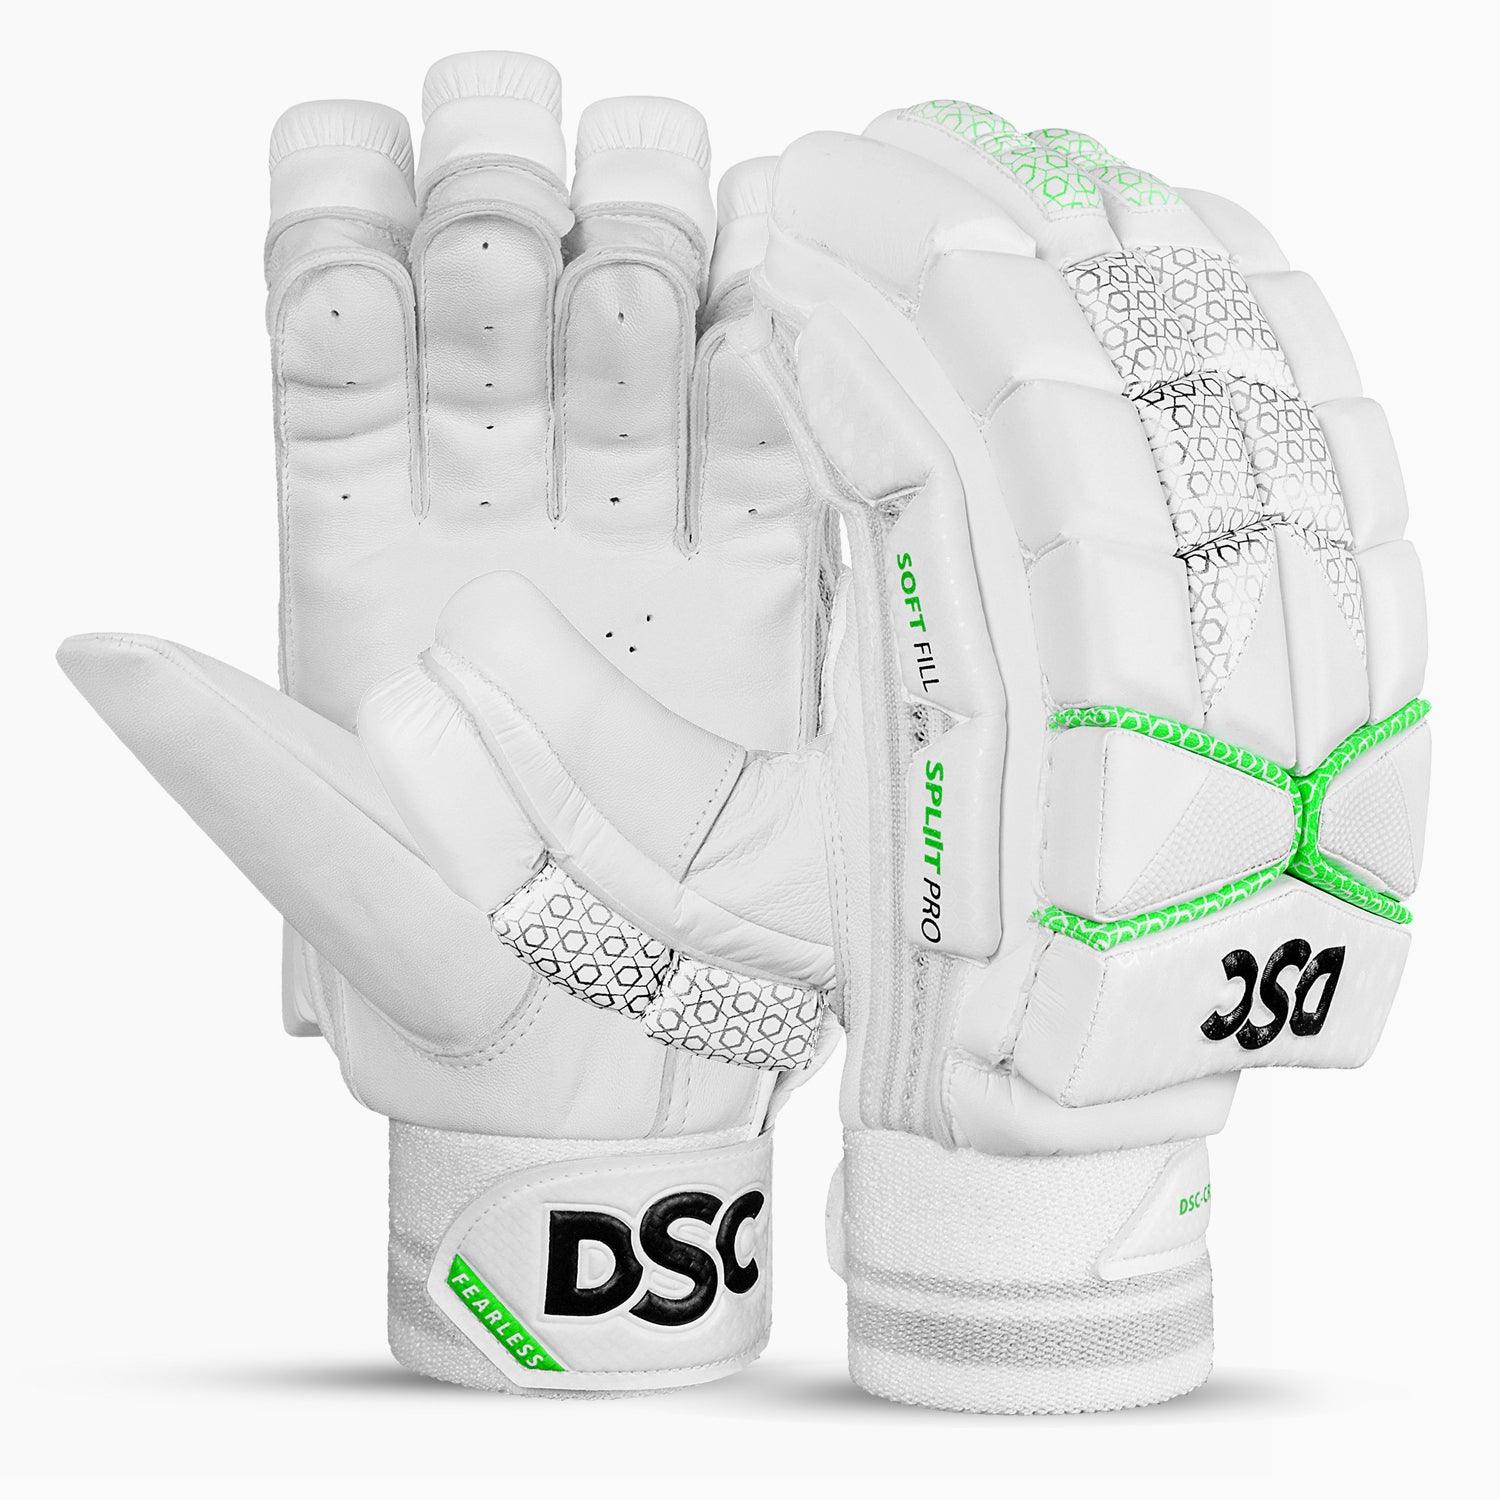 DSC Spliit Pro Cricket Batting Gloves - ADULT - AT Sports